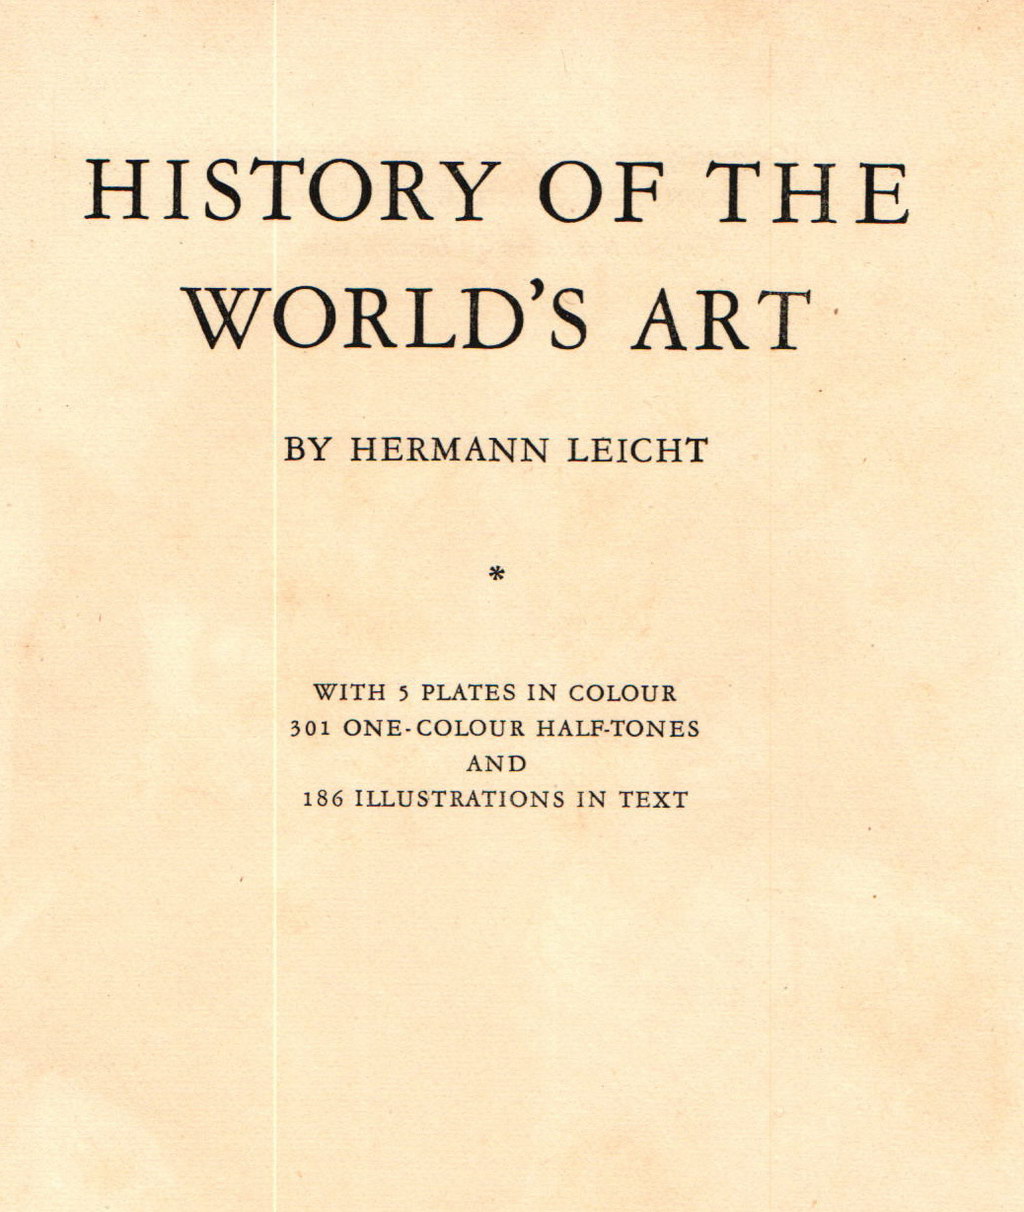 HISTORY OF THE WORLD'S ART